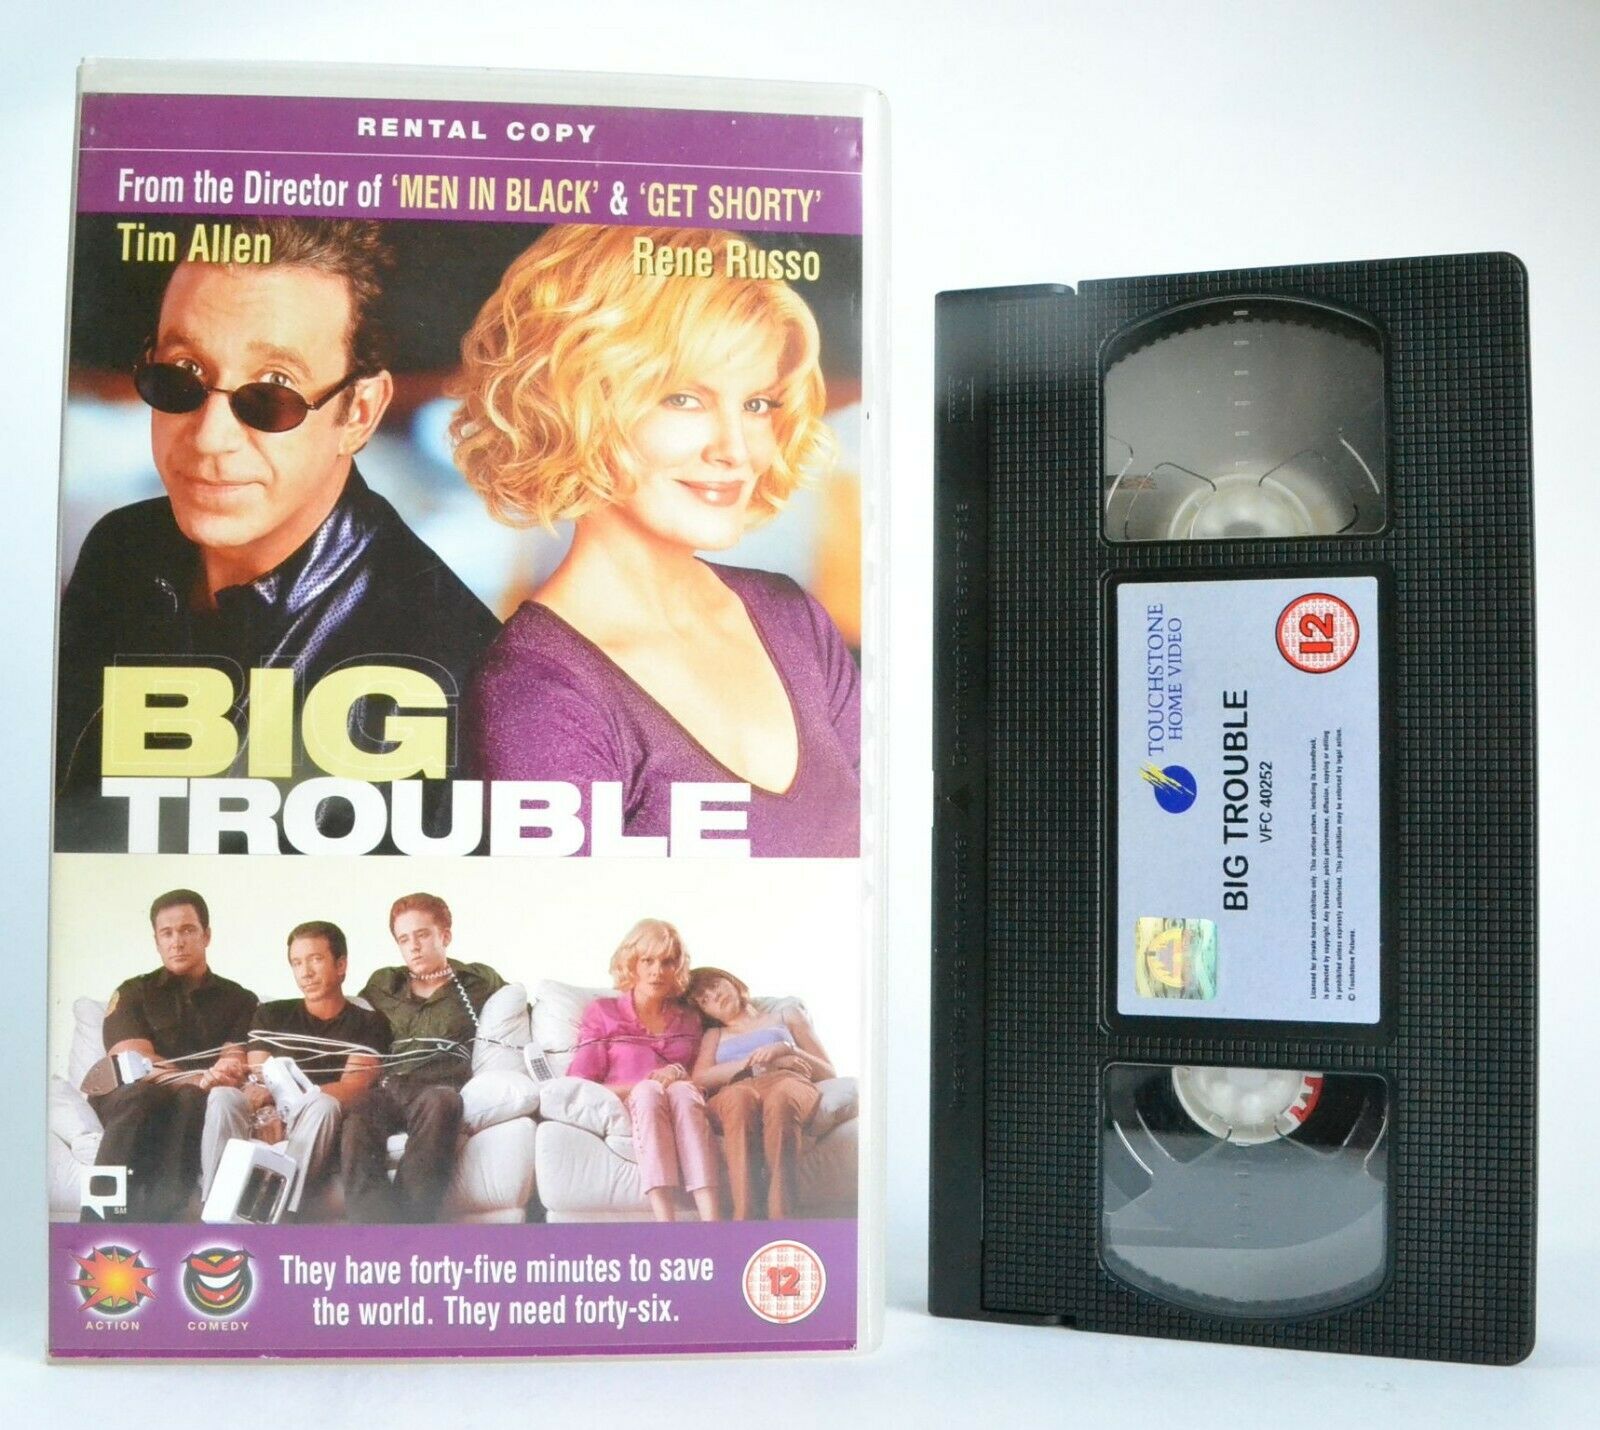 Big Trouble: Based On D.Barry Novel - Gangster Comedy - T.Allen/R.Russo - VHS-